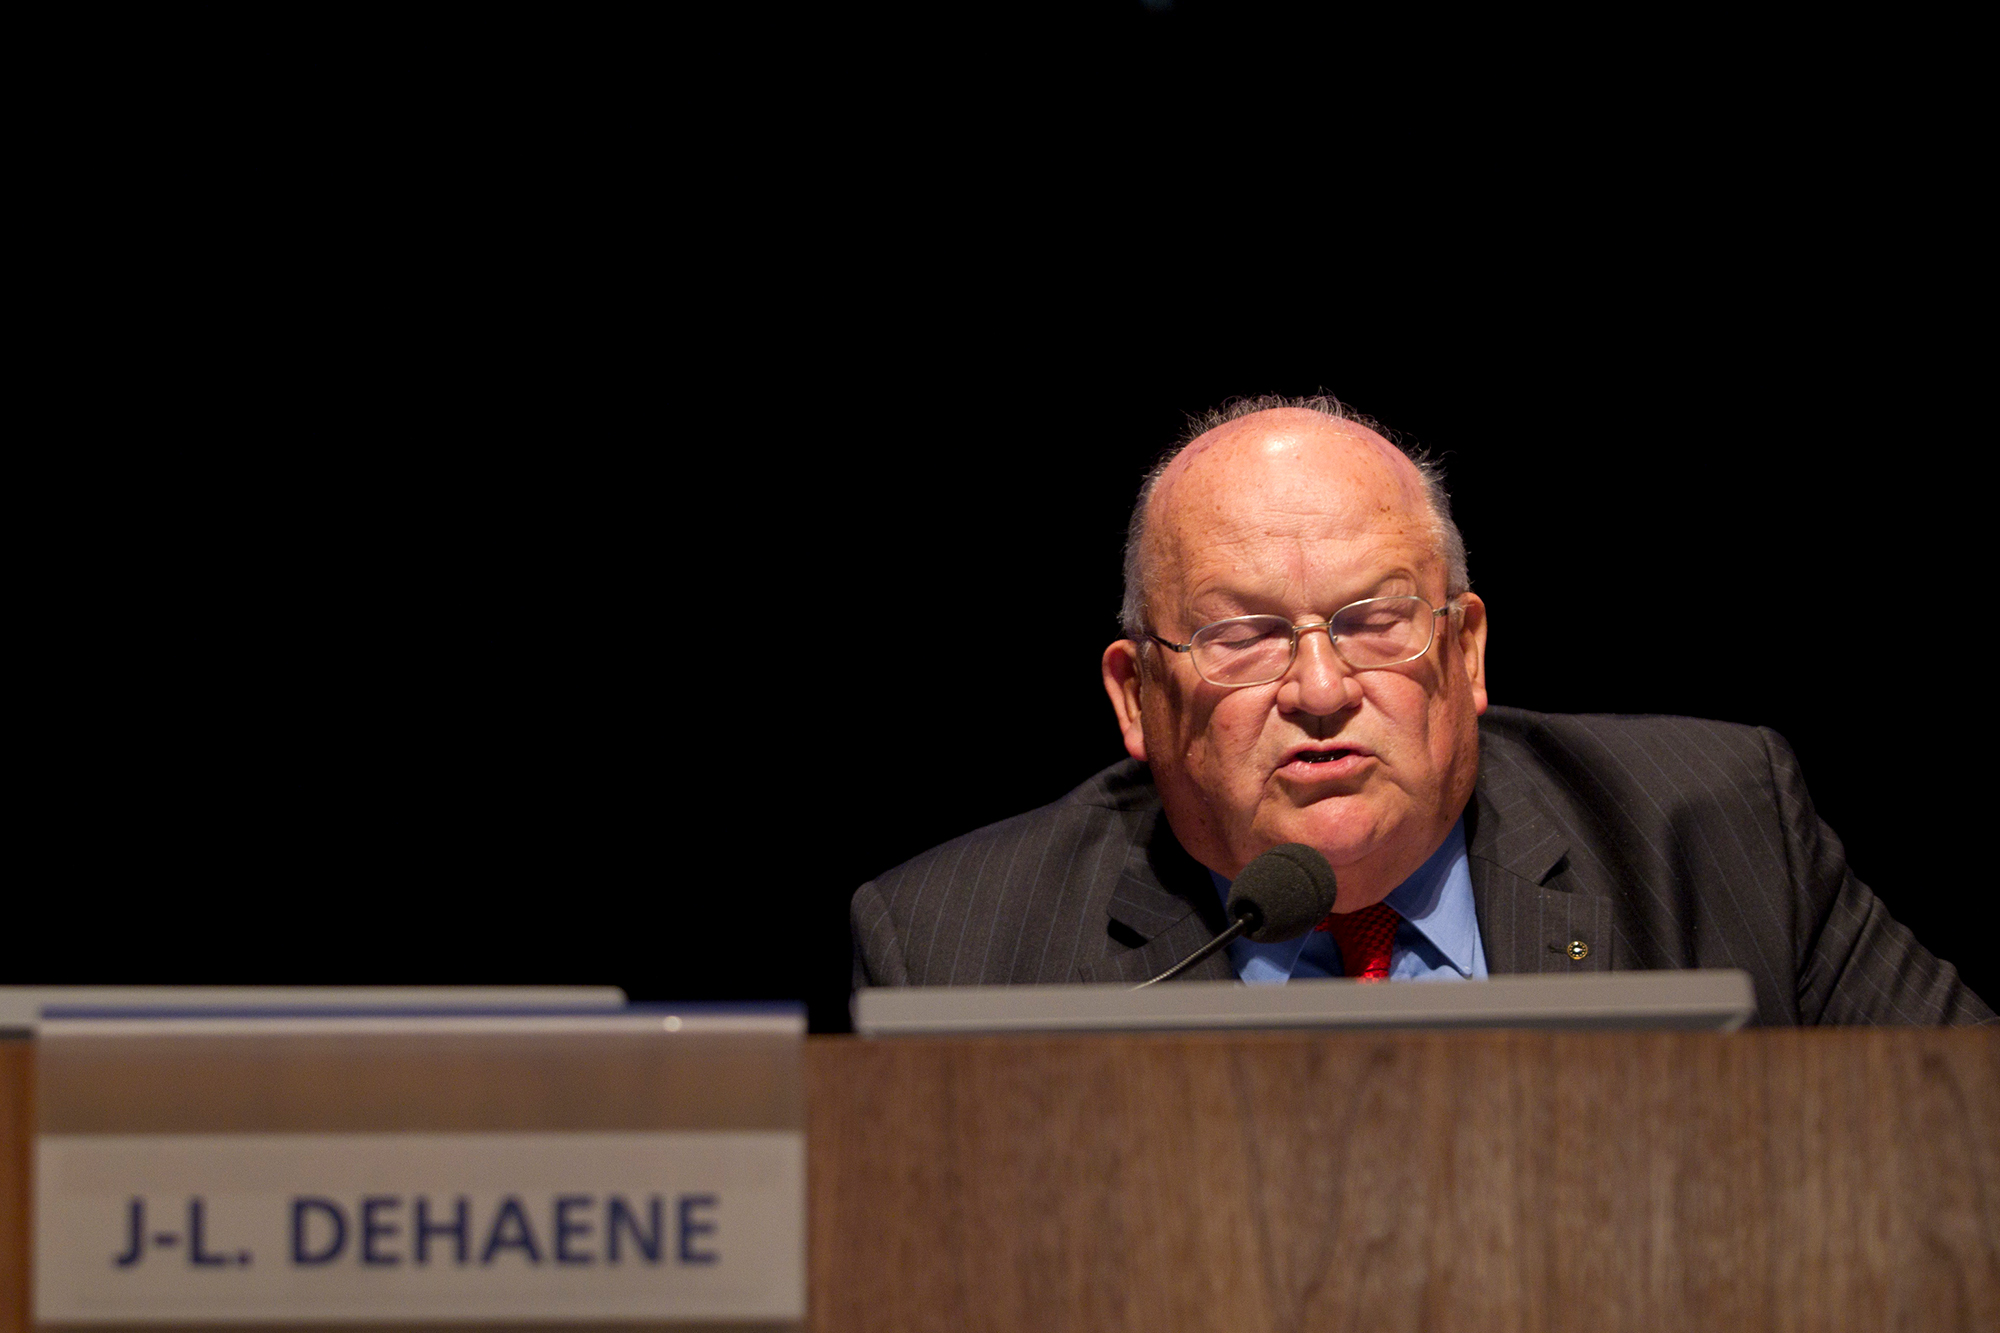 Jean-Luc Dehaene am 9.5.2012 (Bild: Kristof Van Accom/Belga)